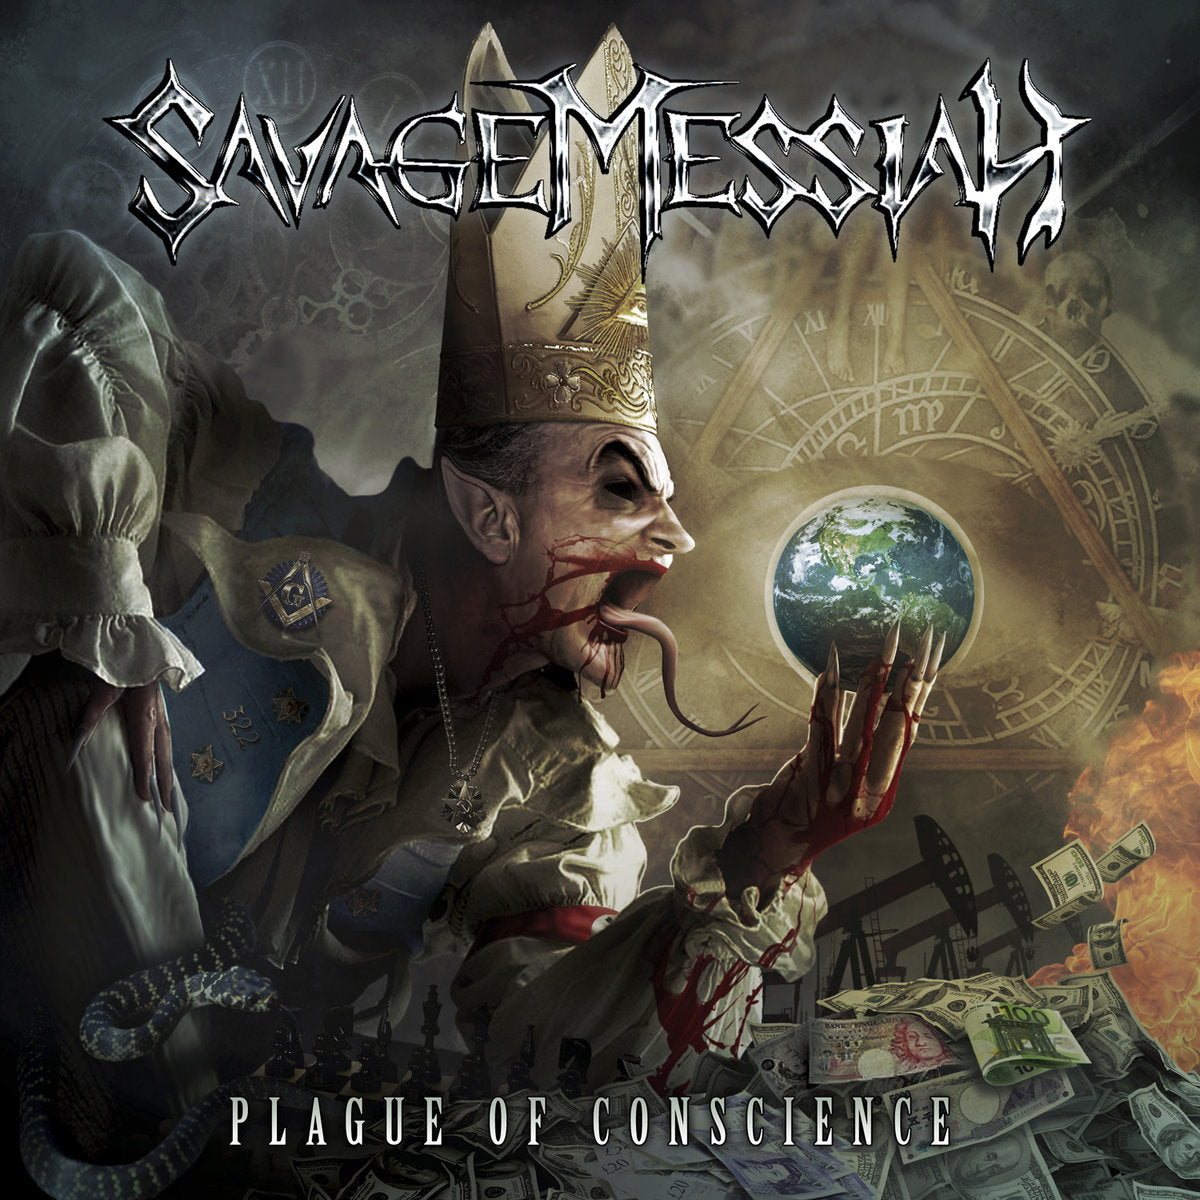 Savage Messiah "Plague Of Conscience" Vinyl